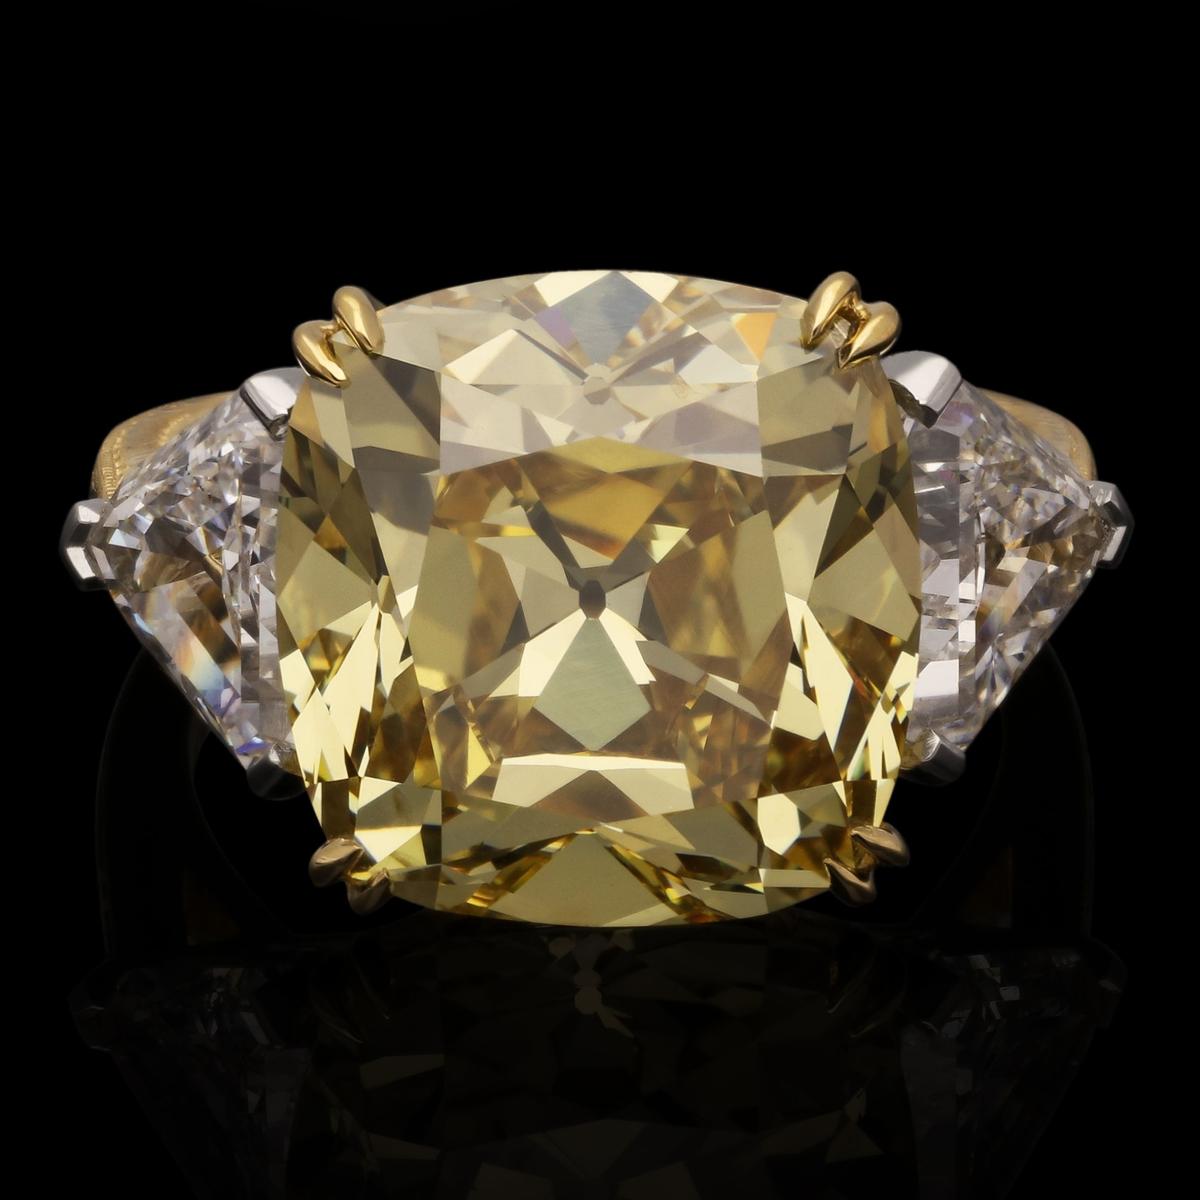 Hancocks 10ct Fancy Yellow Old Mine Cut Diamond Ring Triangular Diamond Shoulders